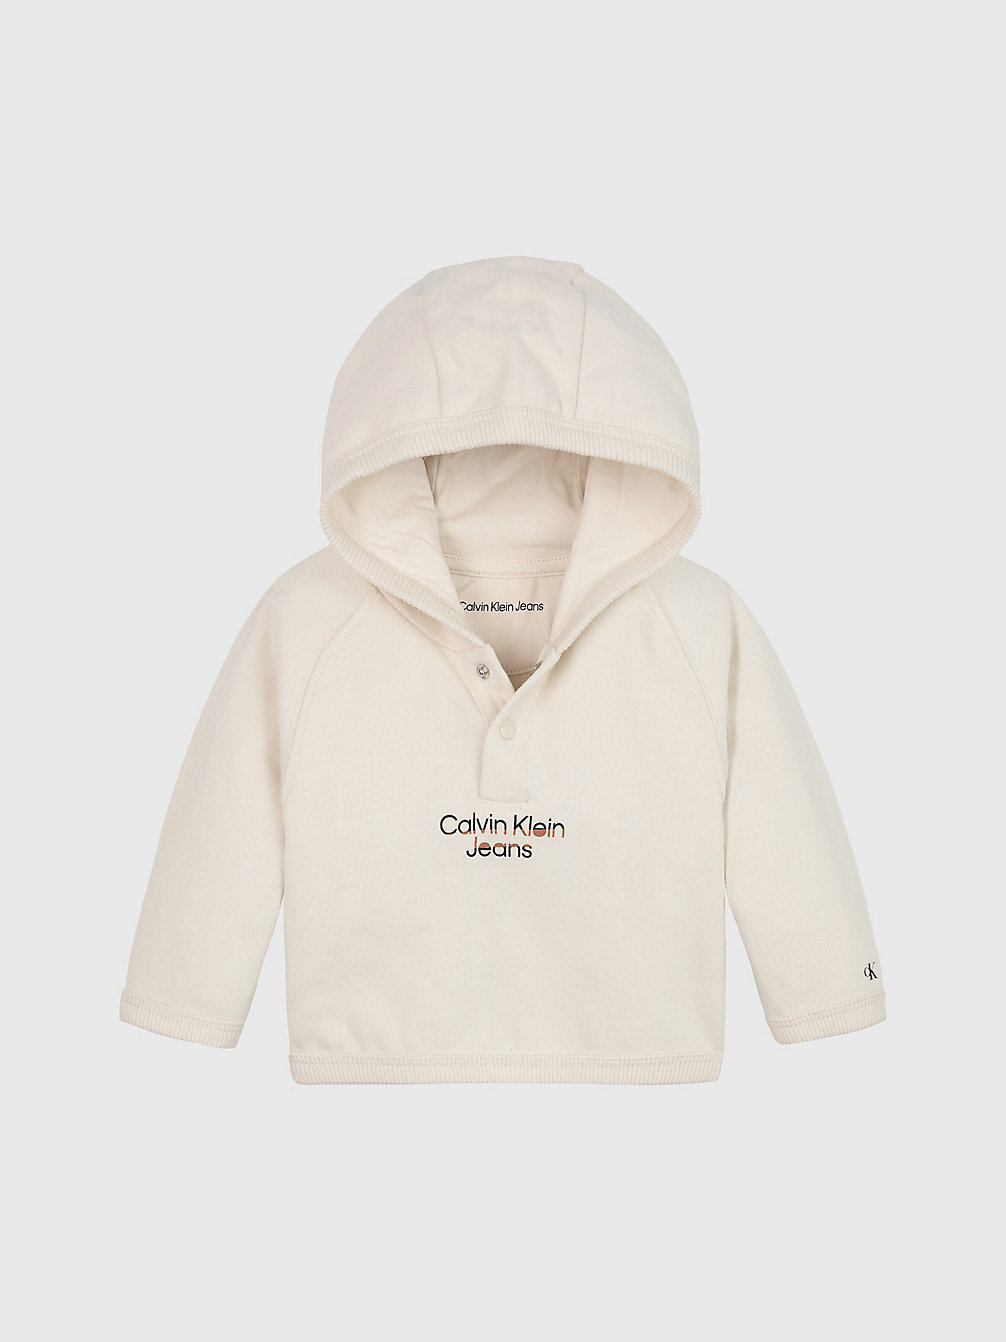 WHITECAP GRAY > Polarowa Bluza Z Kapturem I Logo Dla Noworodka > undefined newborn - Calvin Klein